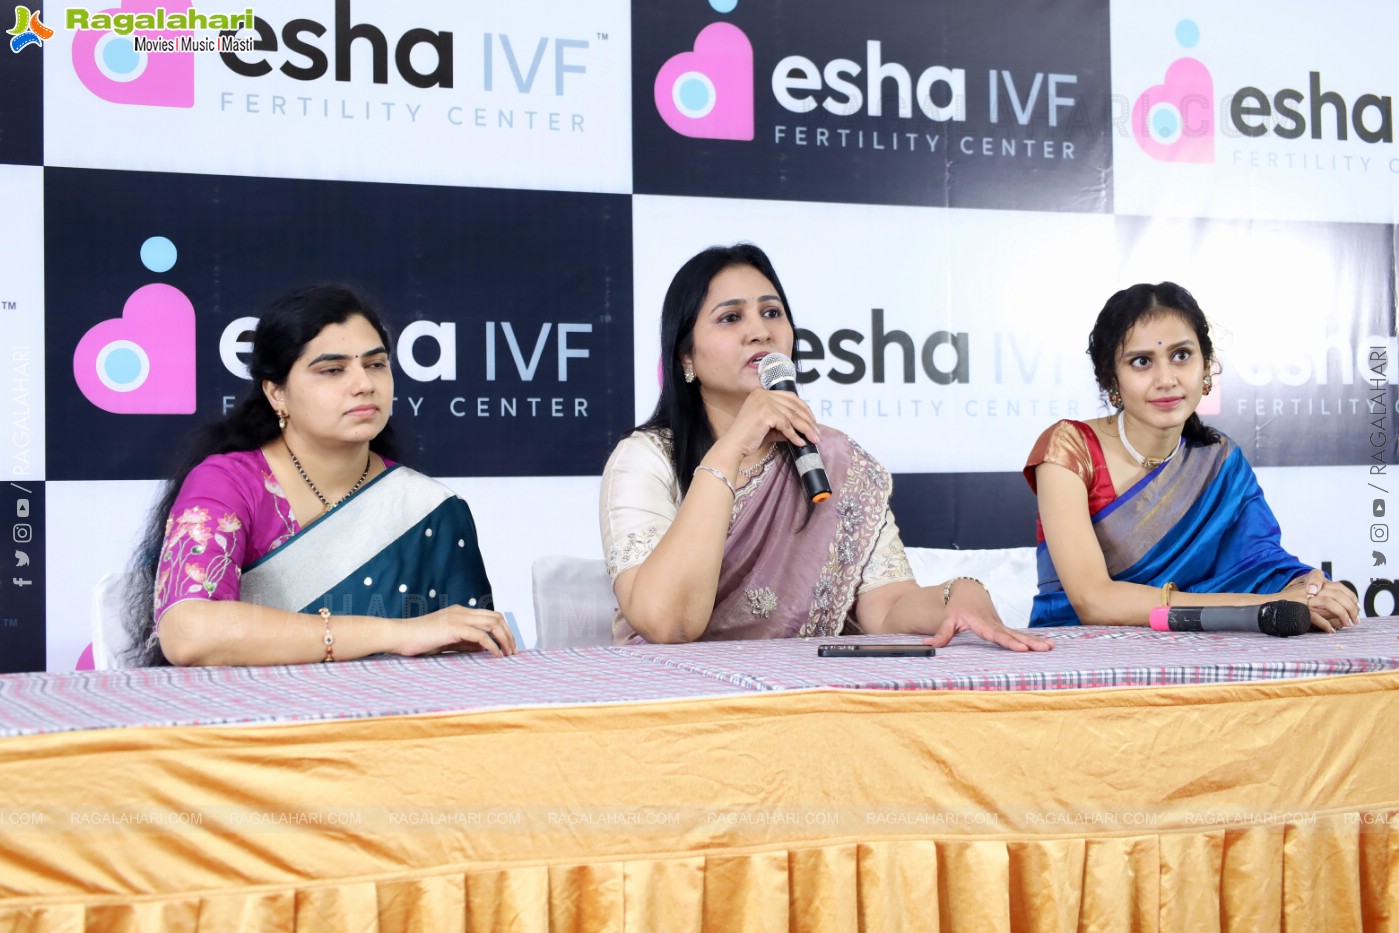 Esha IVF Fertility Center Launch